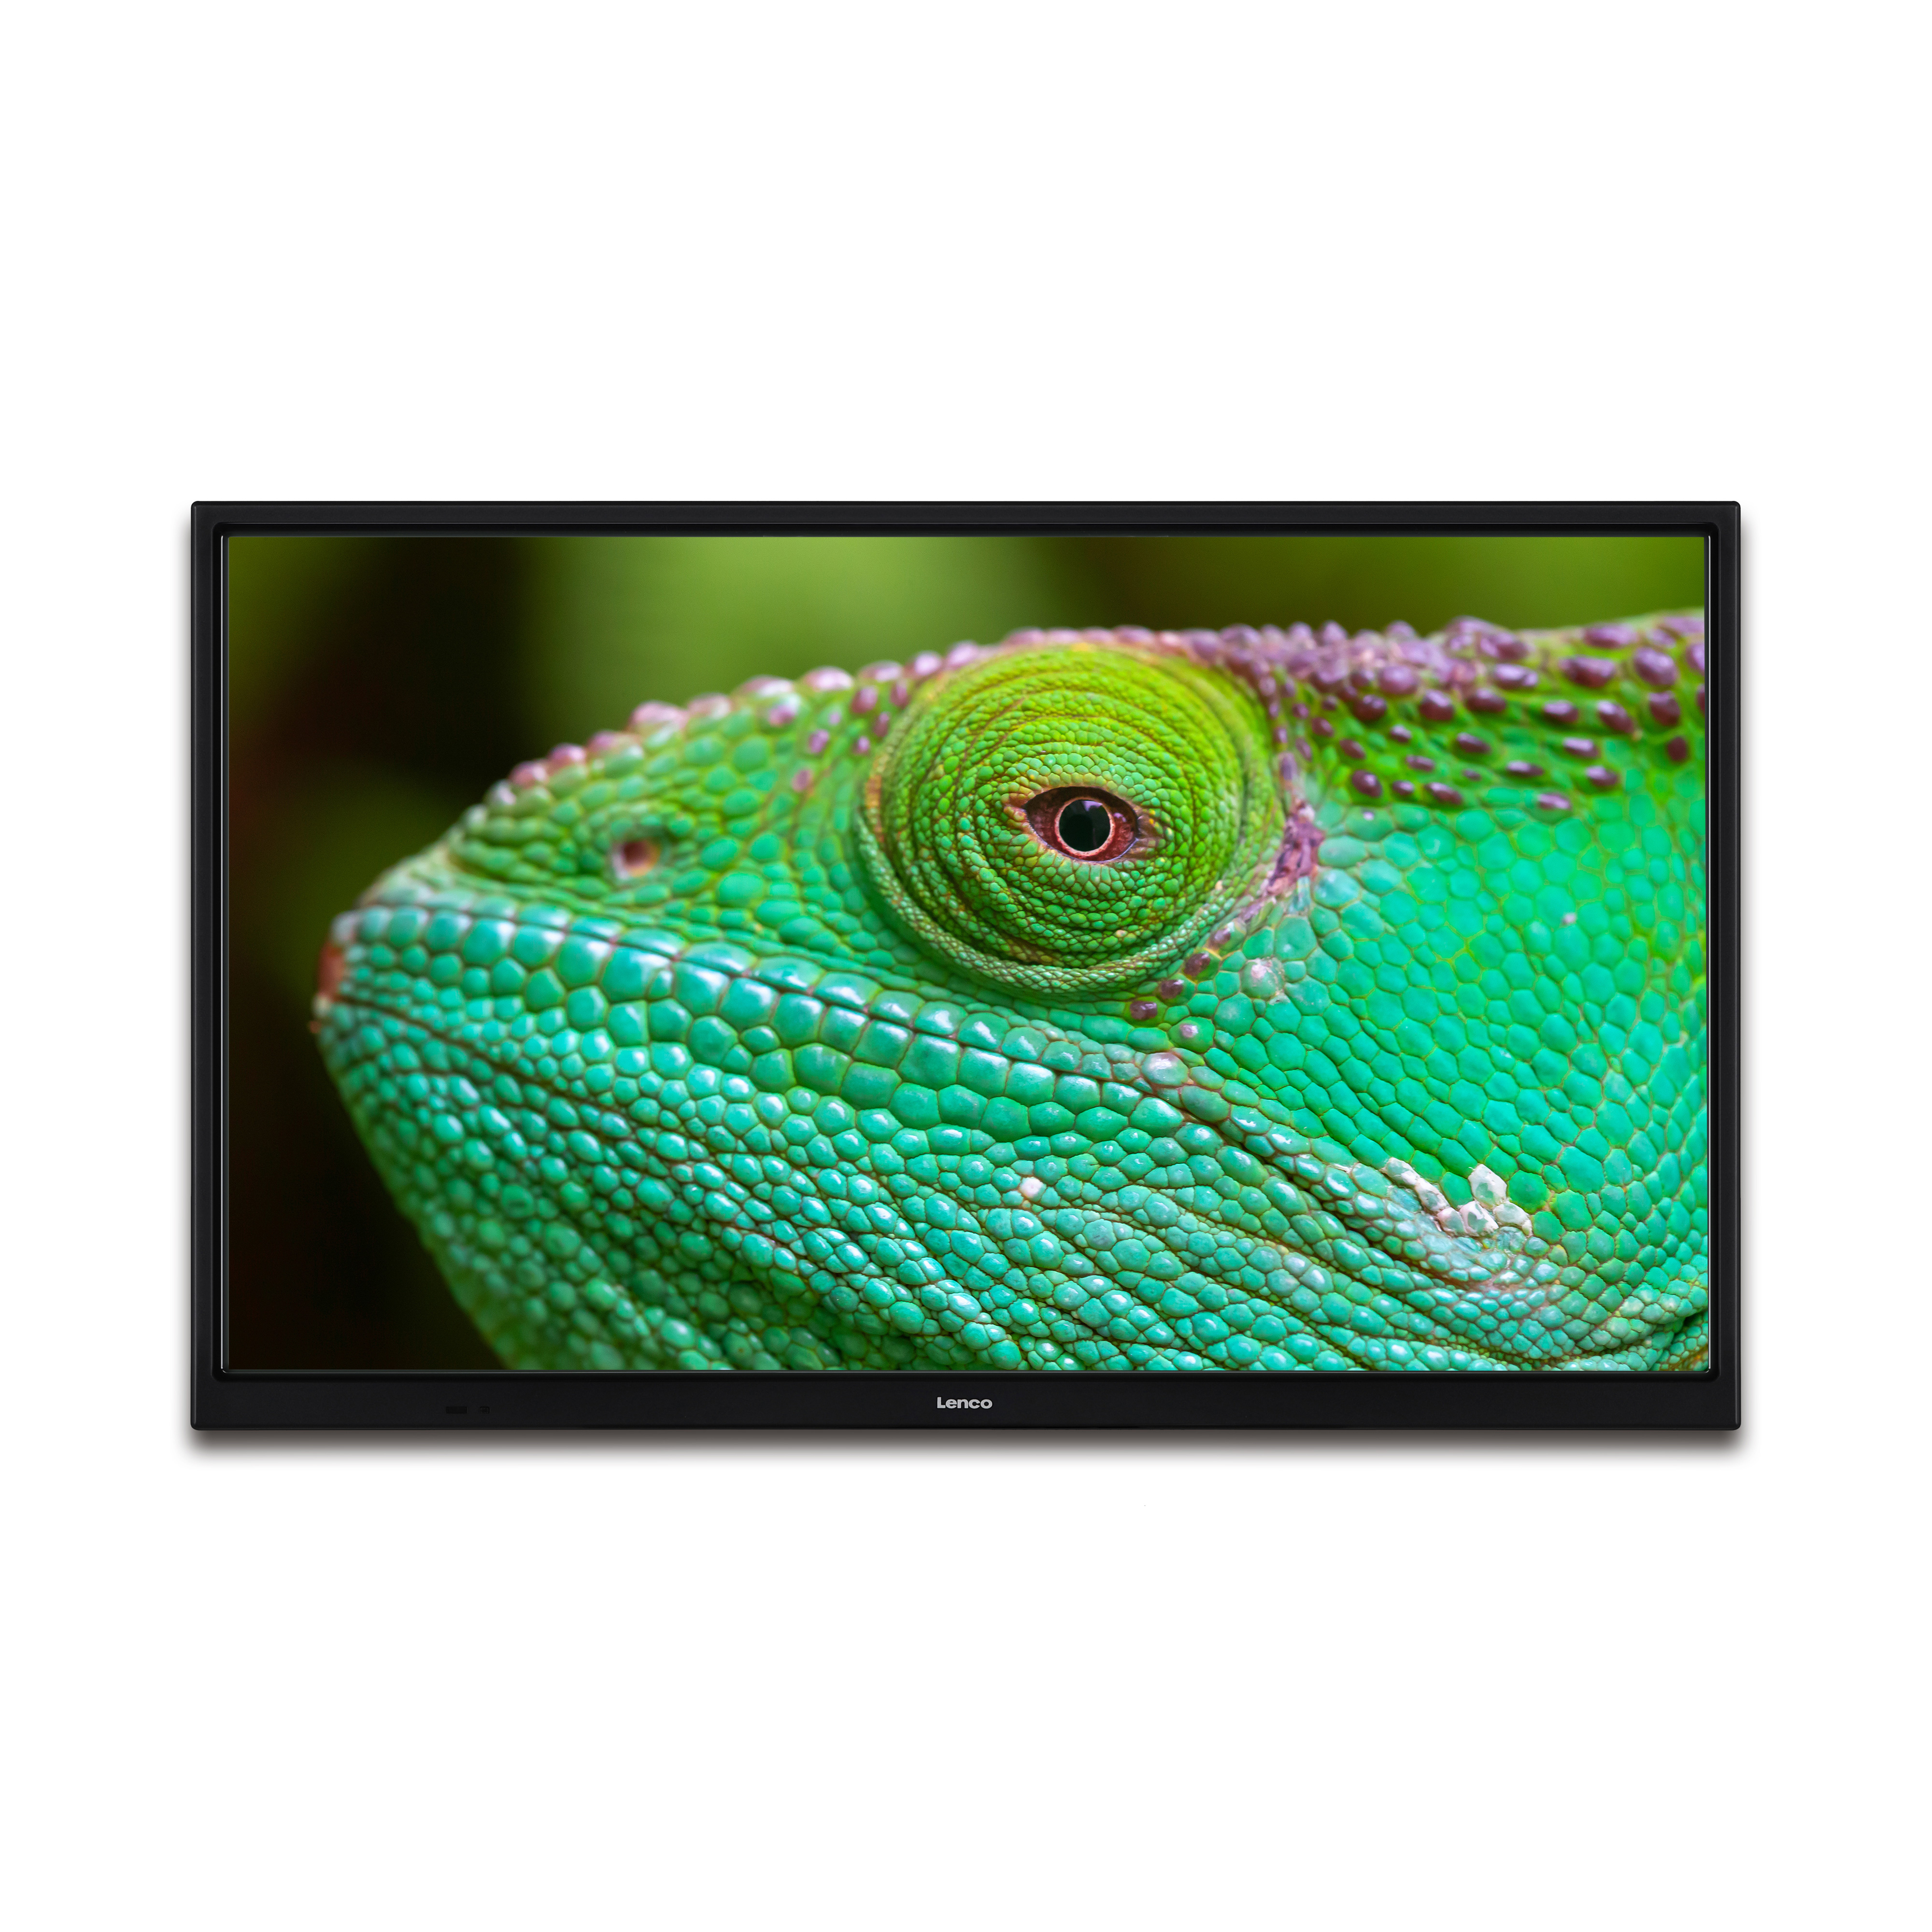 LENCO LED-2463BK - Fernseher 61 cm, Zoll HD, mit TV 24 (Flat, Bluetooth - / LED Android)